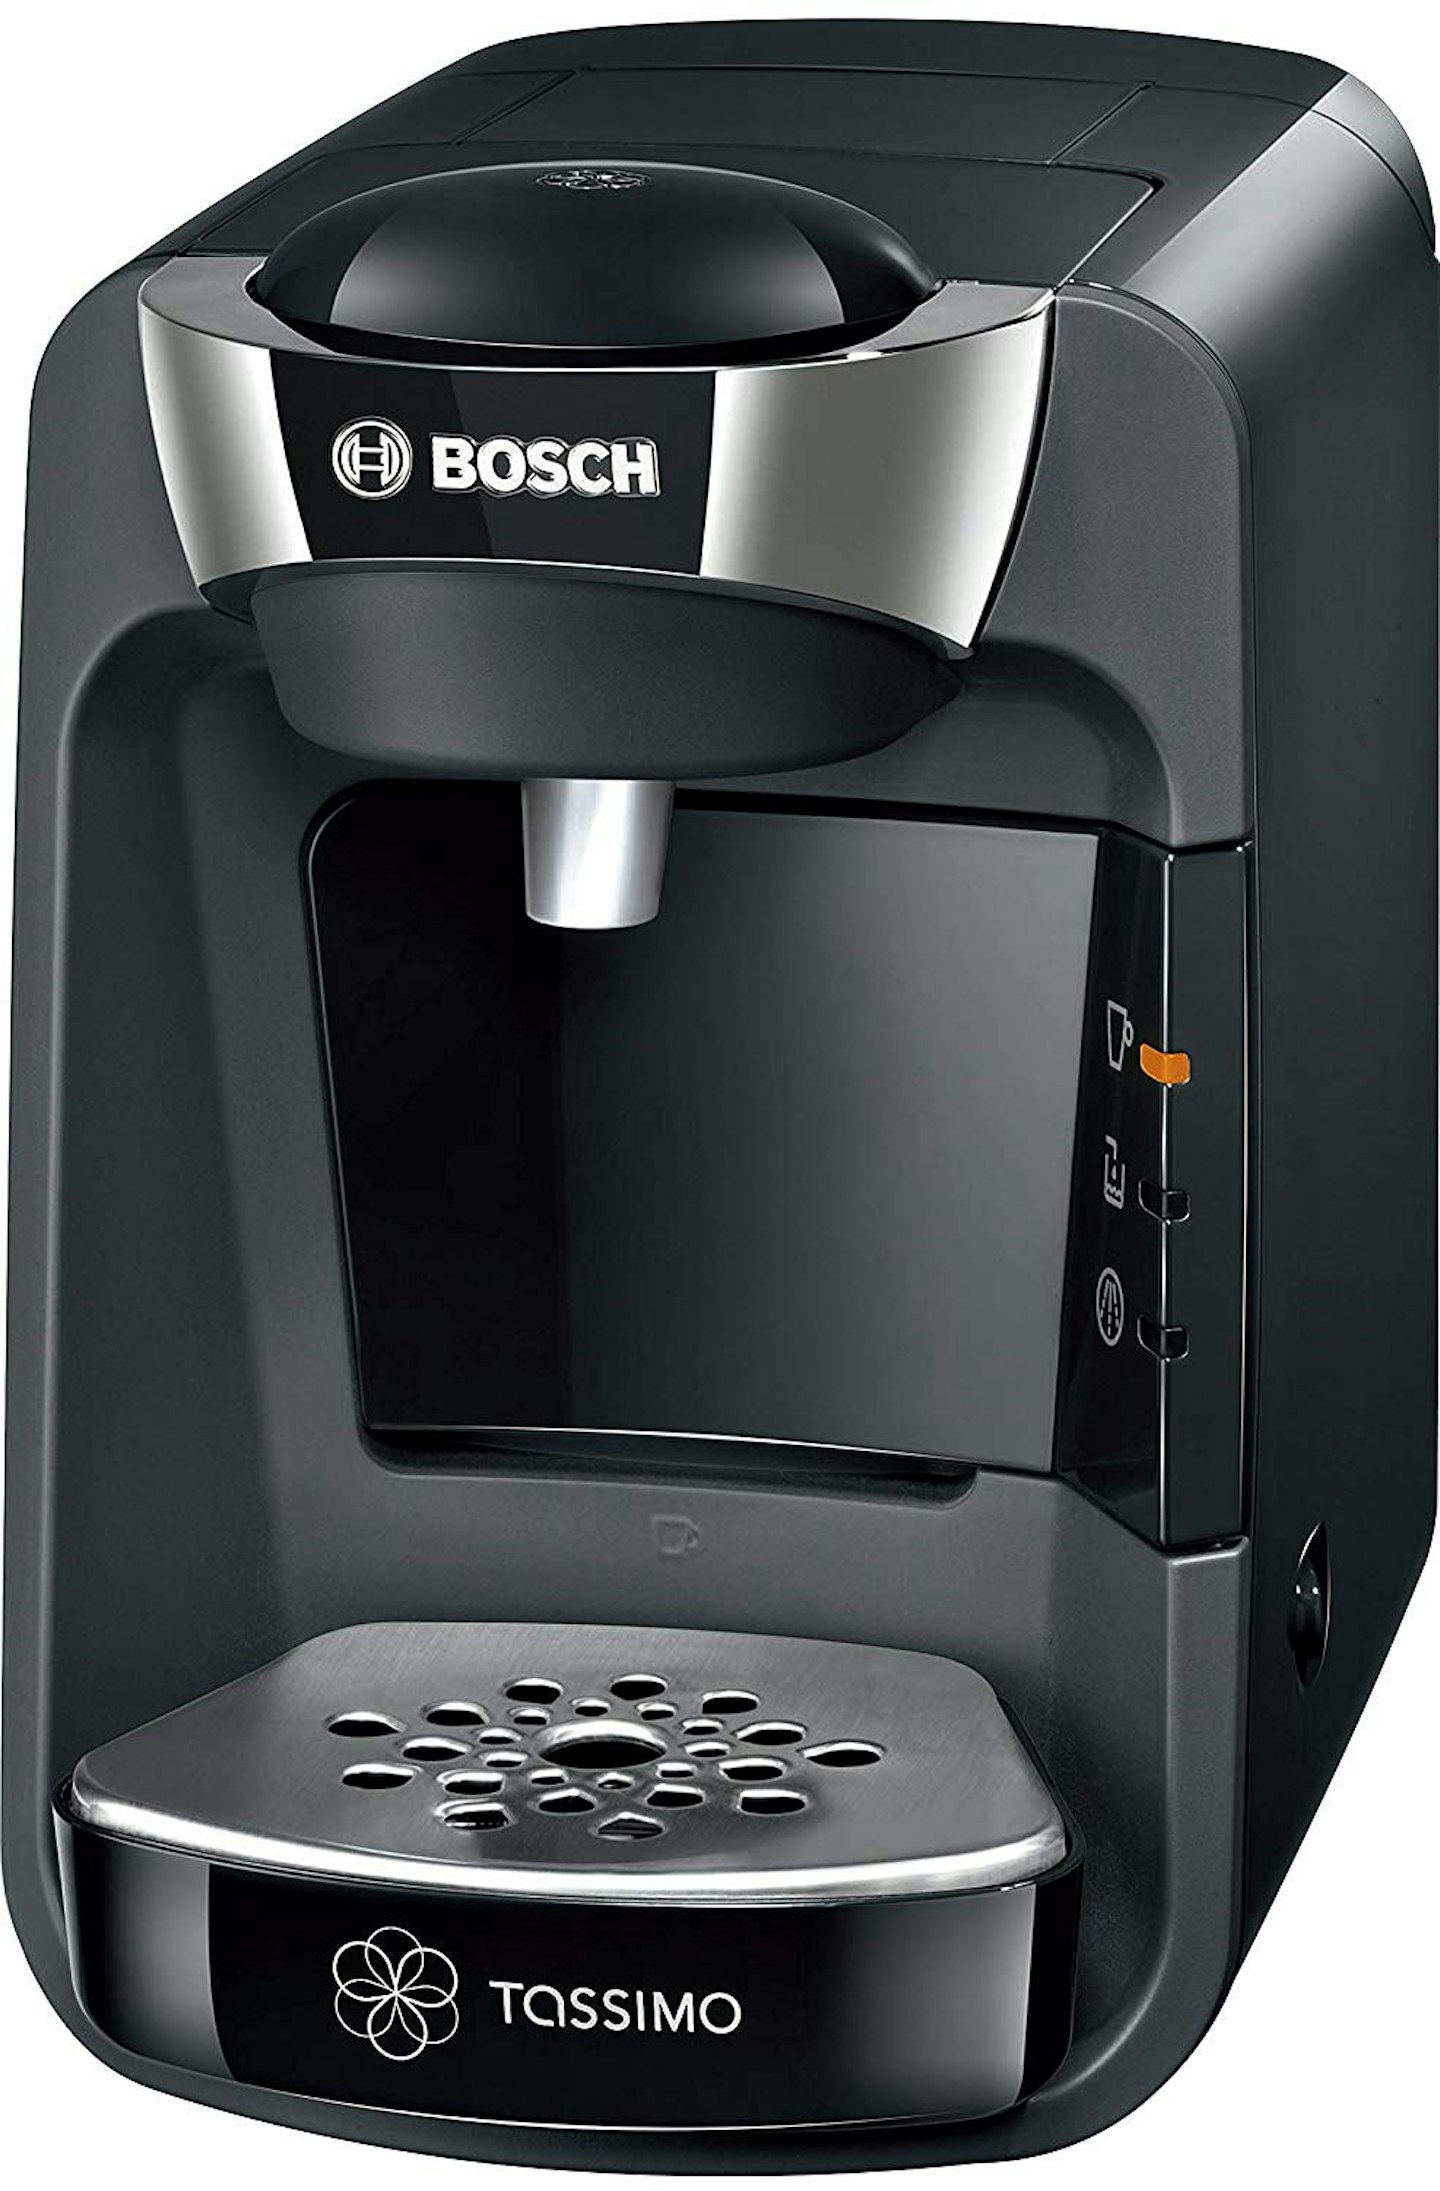 Bosch Tassimo Coffee Machine